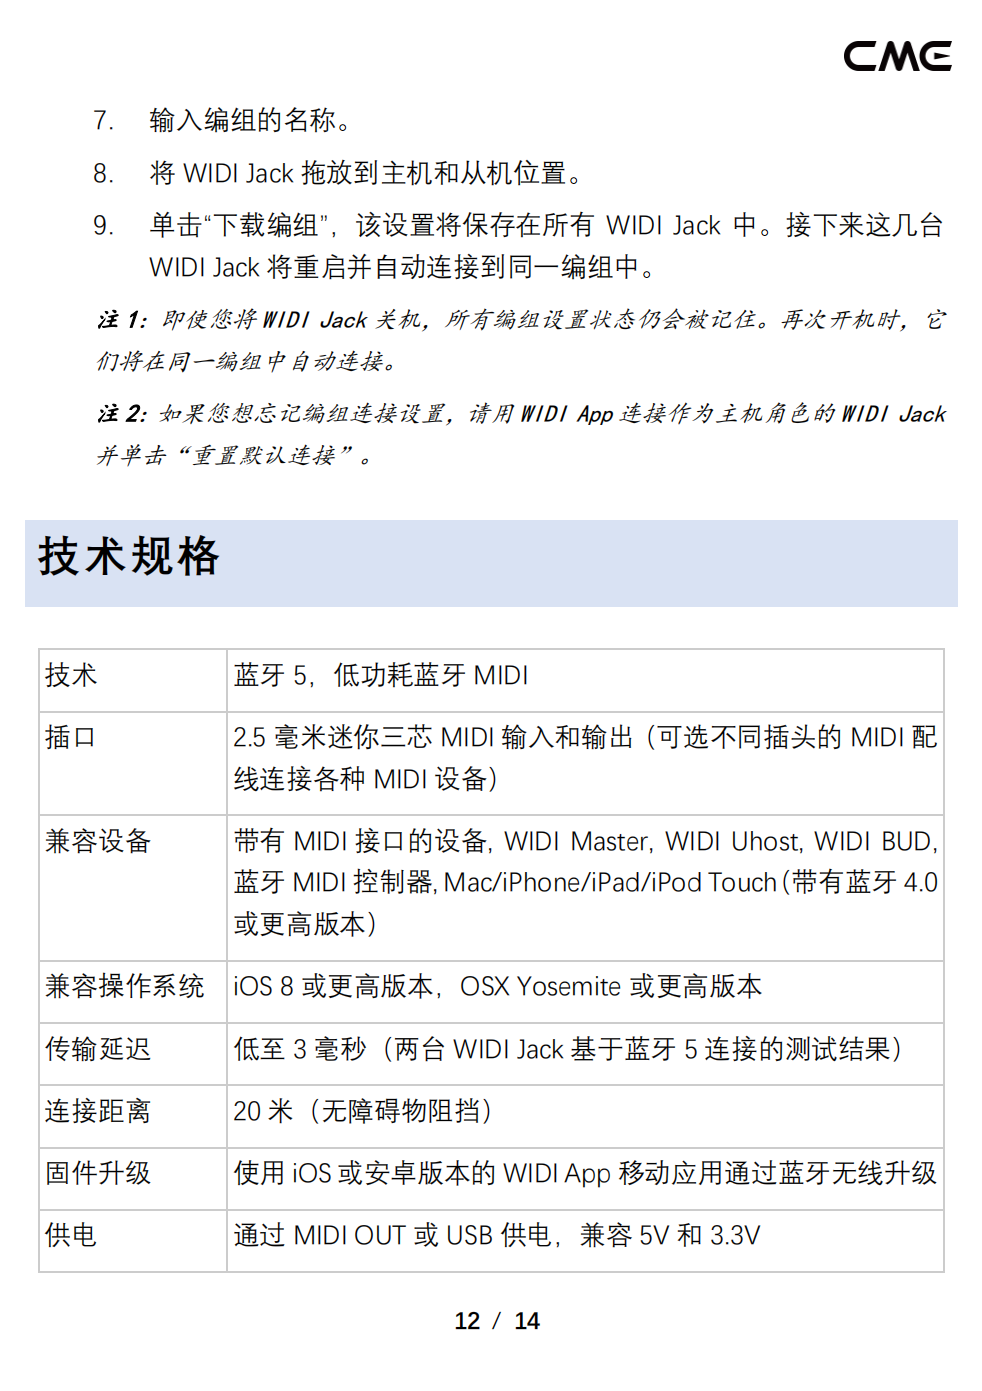 WIDI Jack Owner's manual_v06_mobile view_cn_11.png